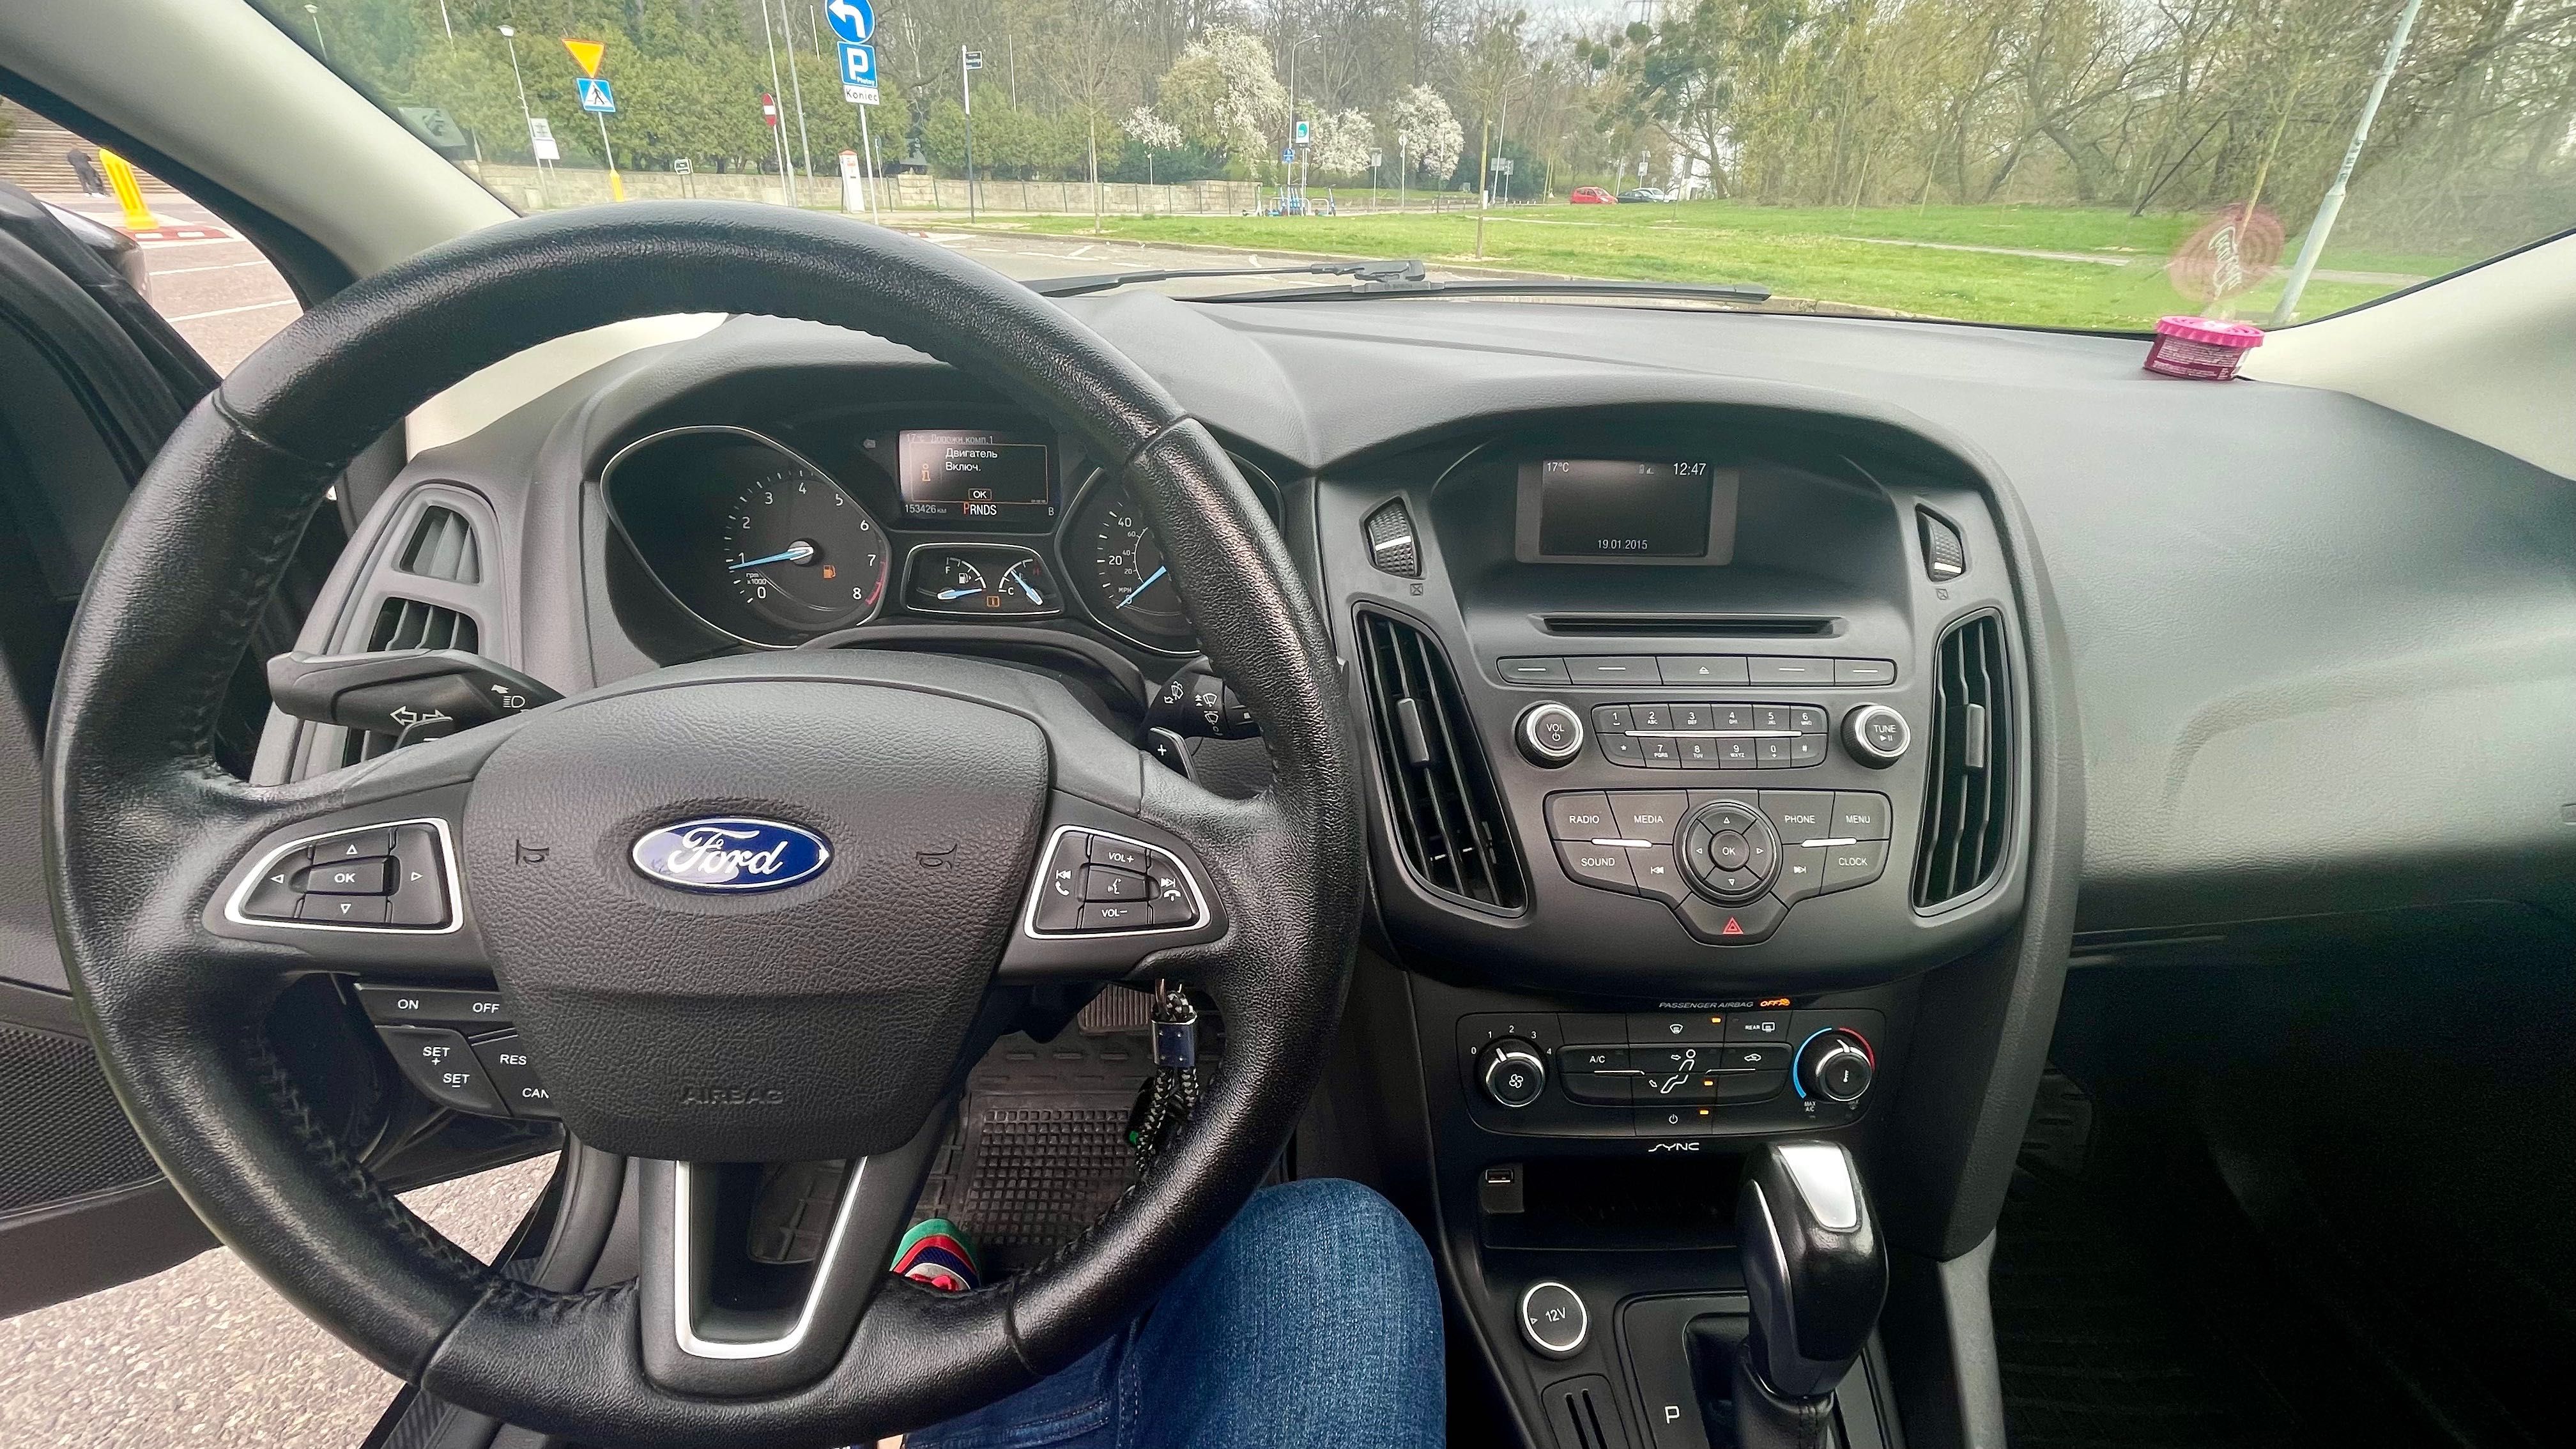 Ford Focus mk3 2015 2.0 l (150KM) LPG/benzyna